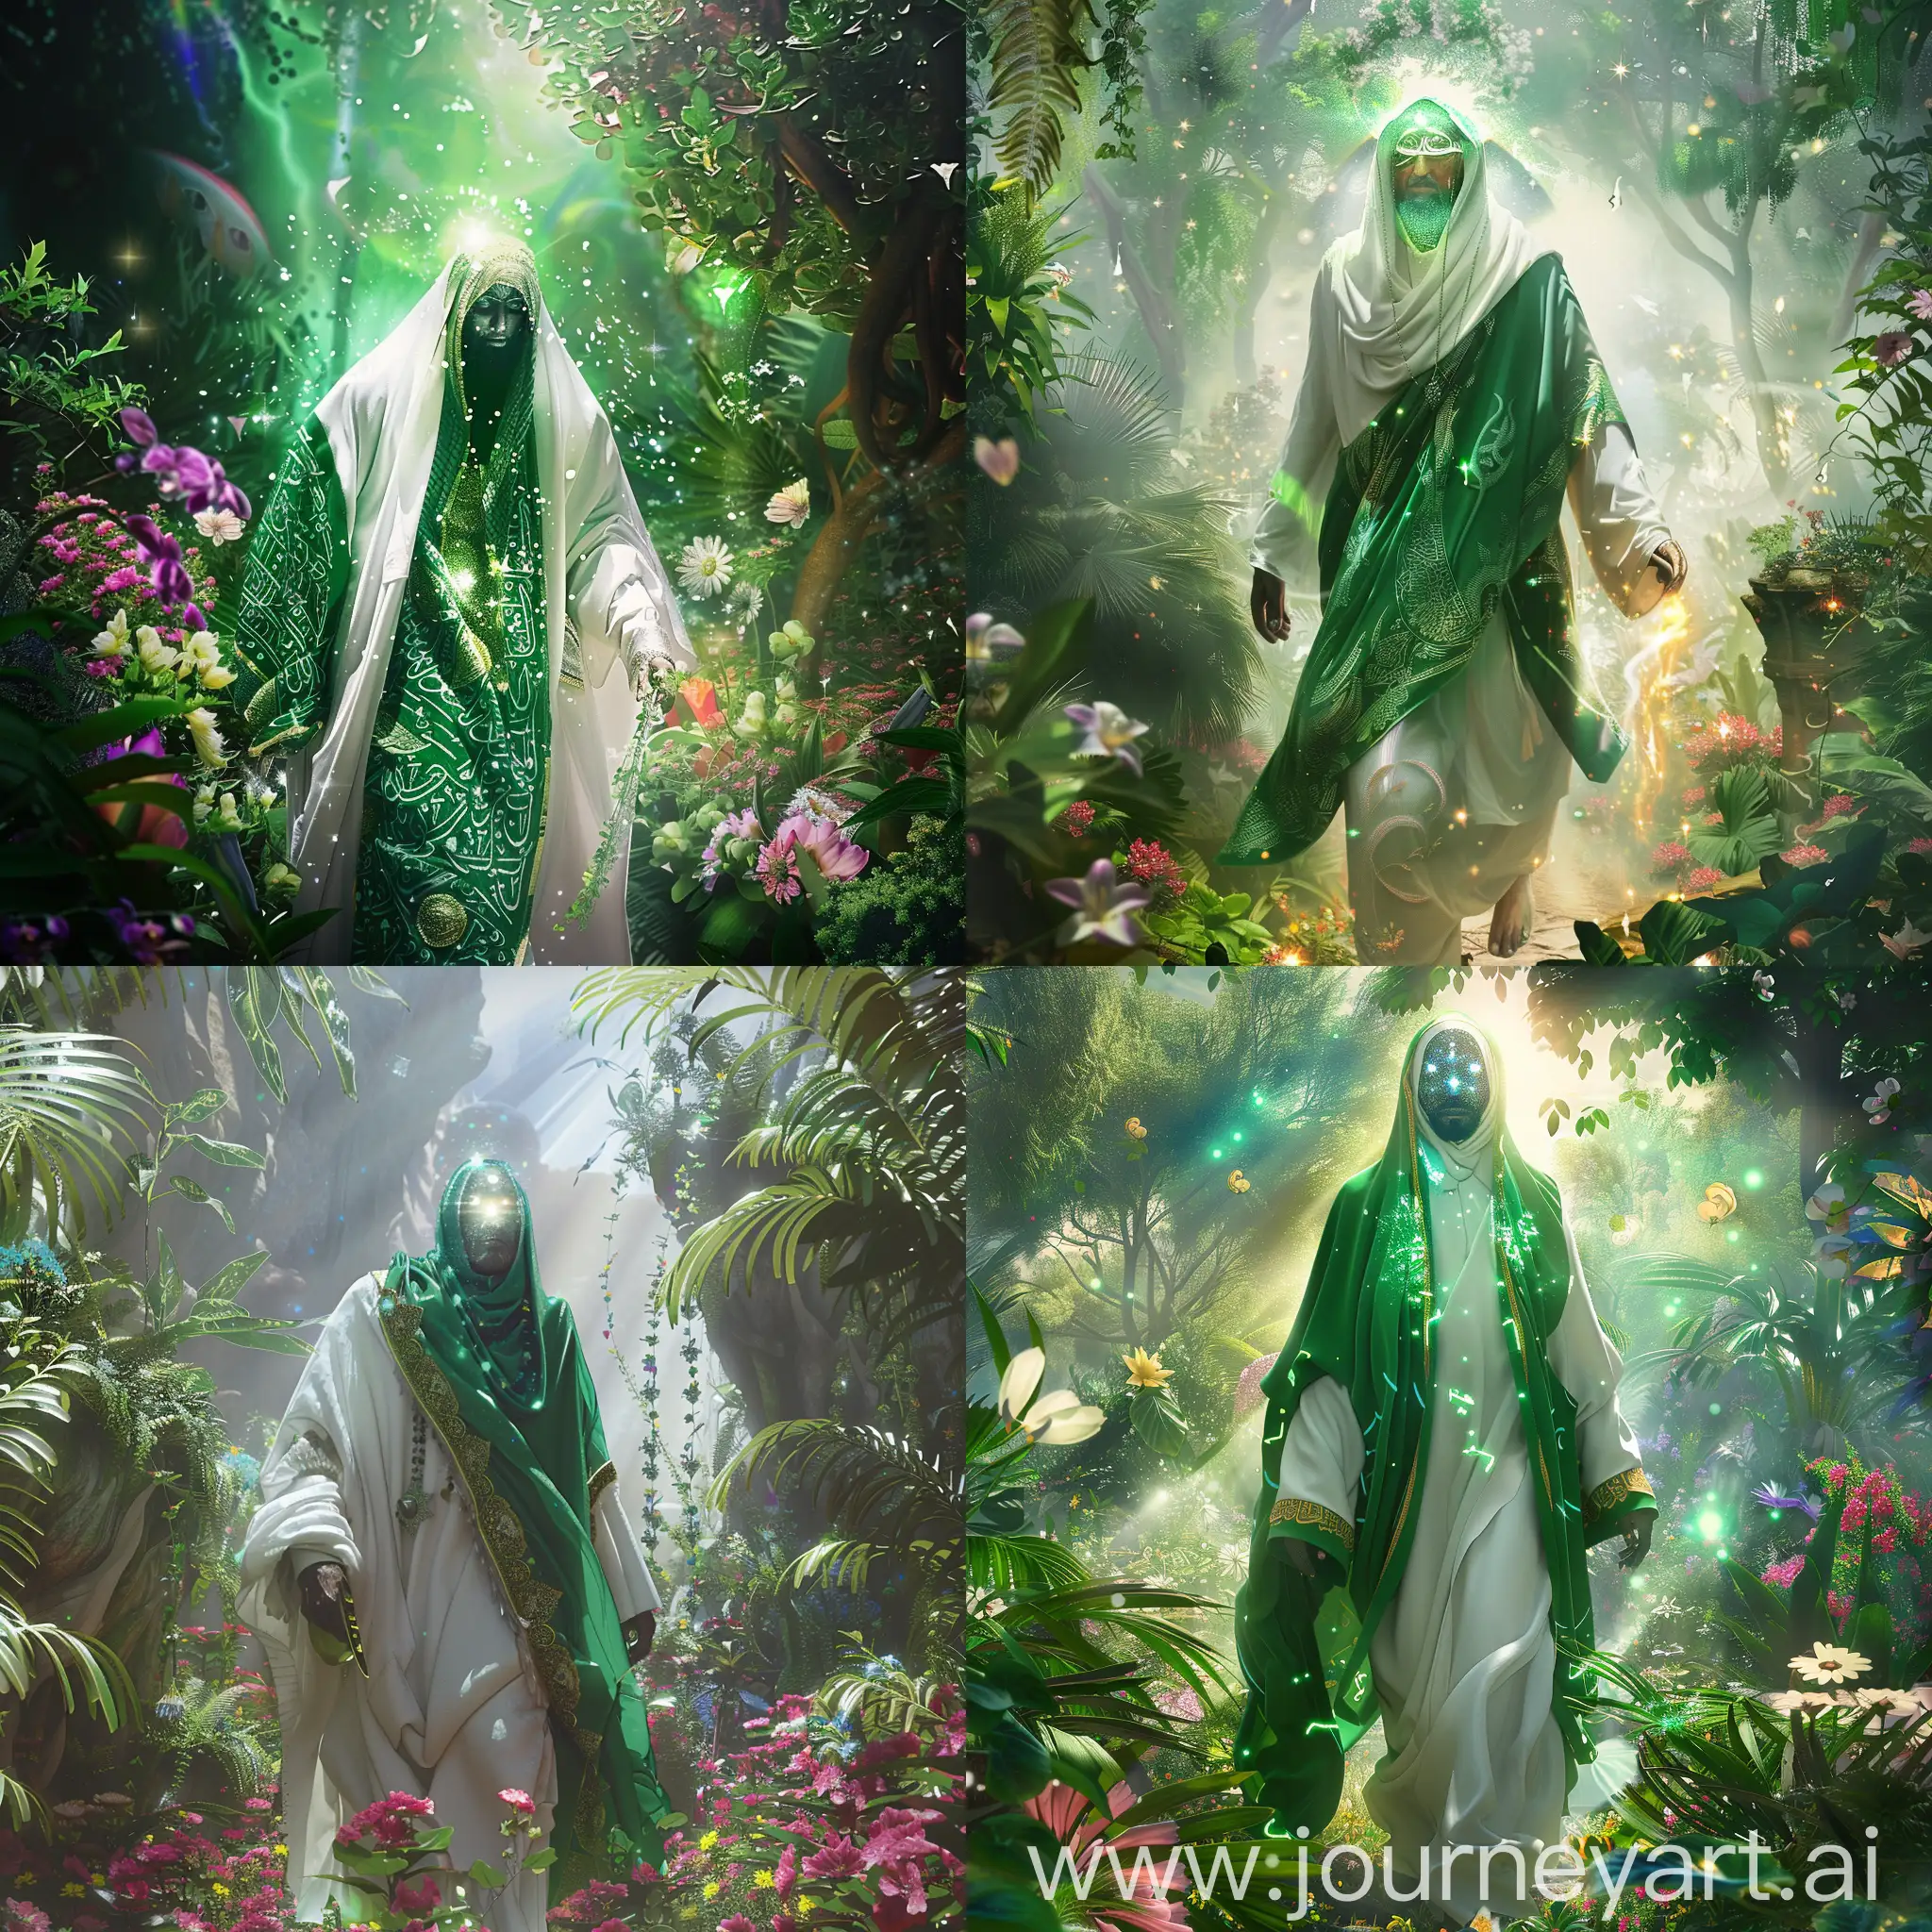 Islamic-Figure-in-Vibrant-Arabic-Attire-Entering-Enchanted-Cosmic-Jungle